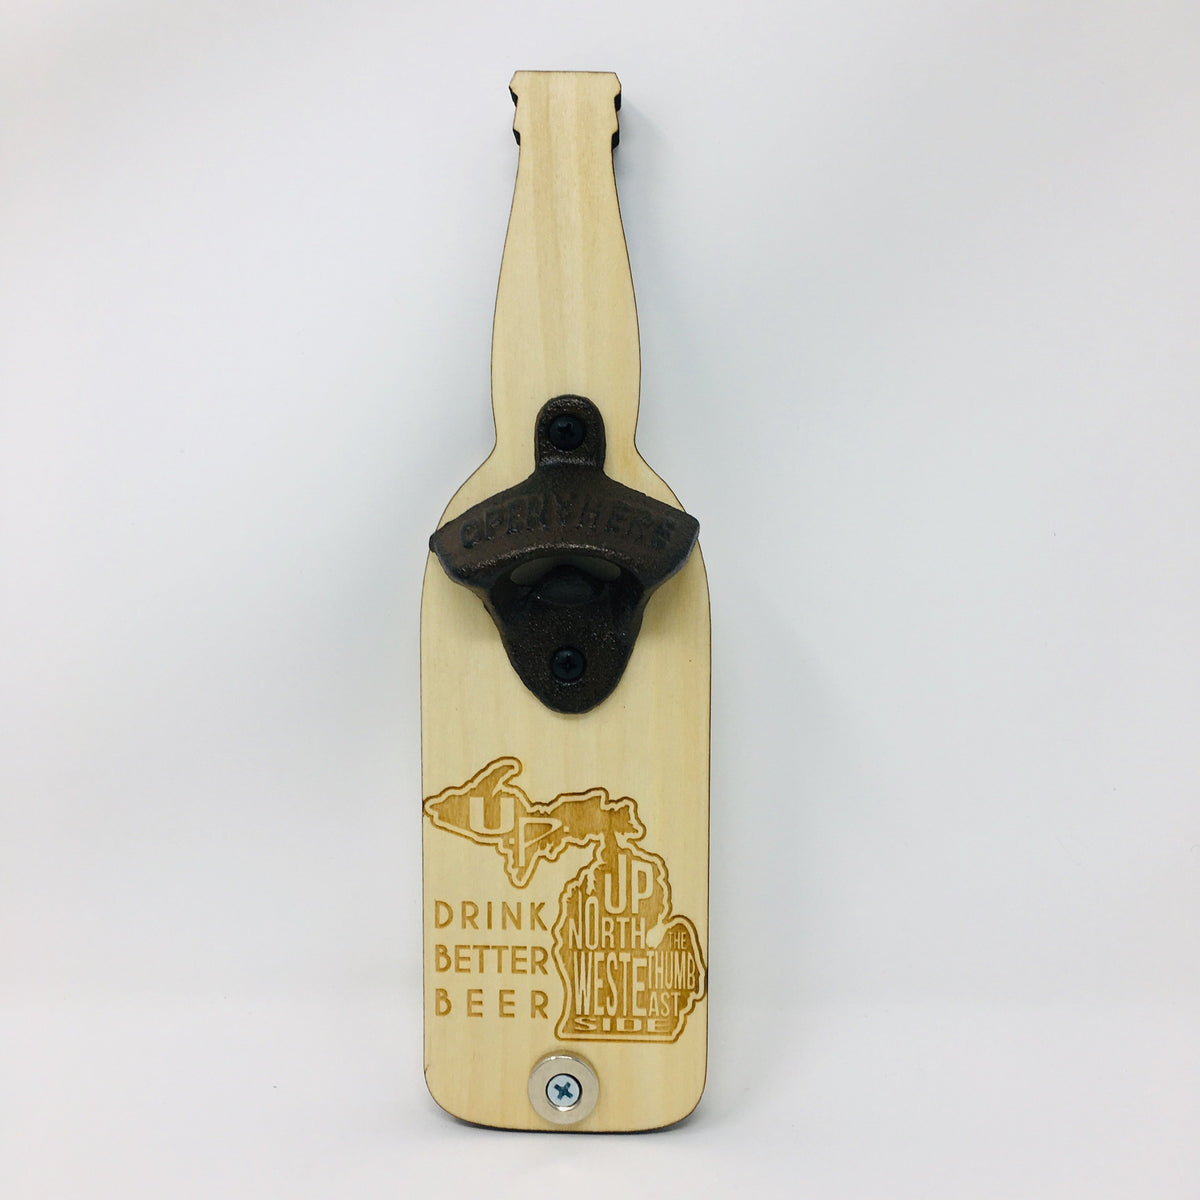 Michigan Wood Bottle Opener